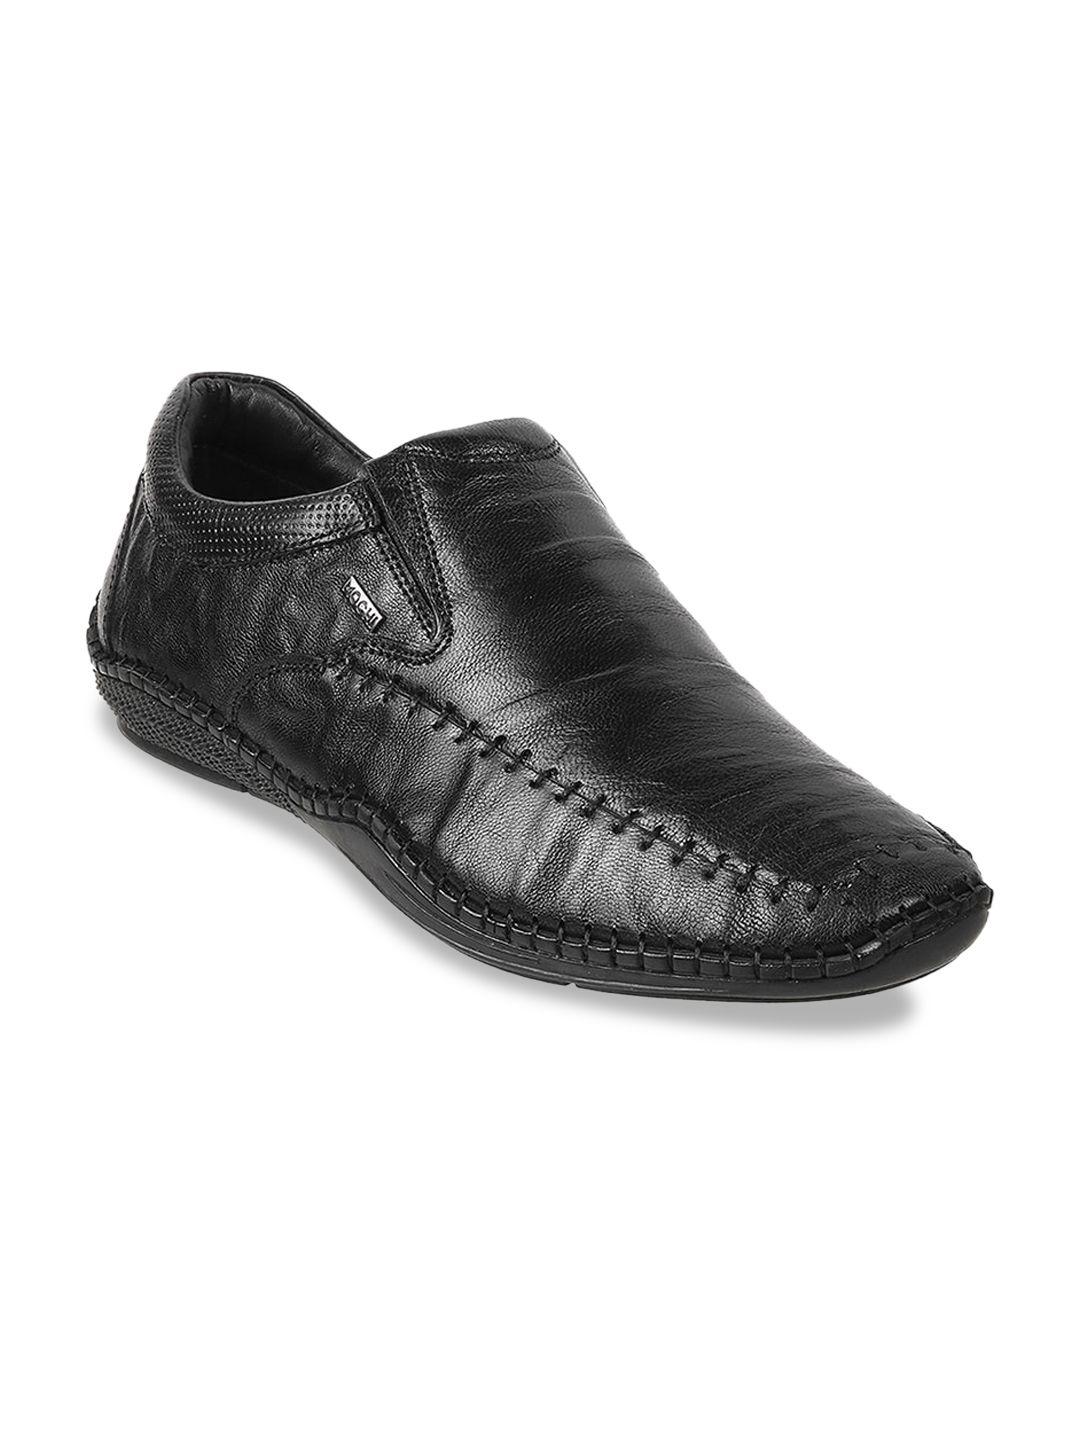 mochi-men-leather-slip-on-loafers